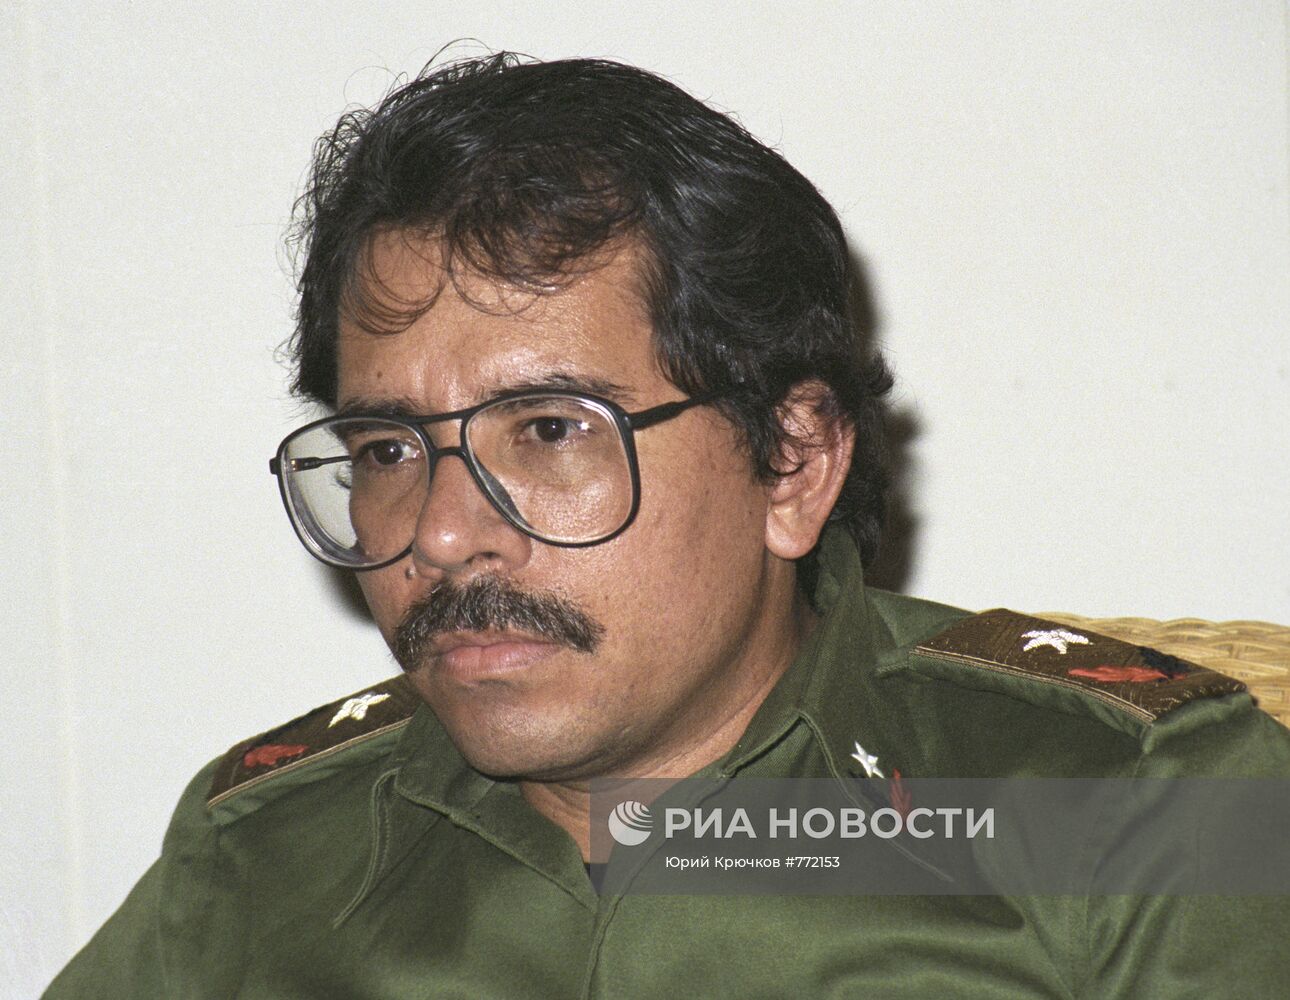 Президент Никарагуа Даниэль Ортега Сааведра